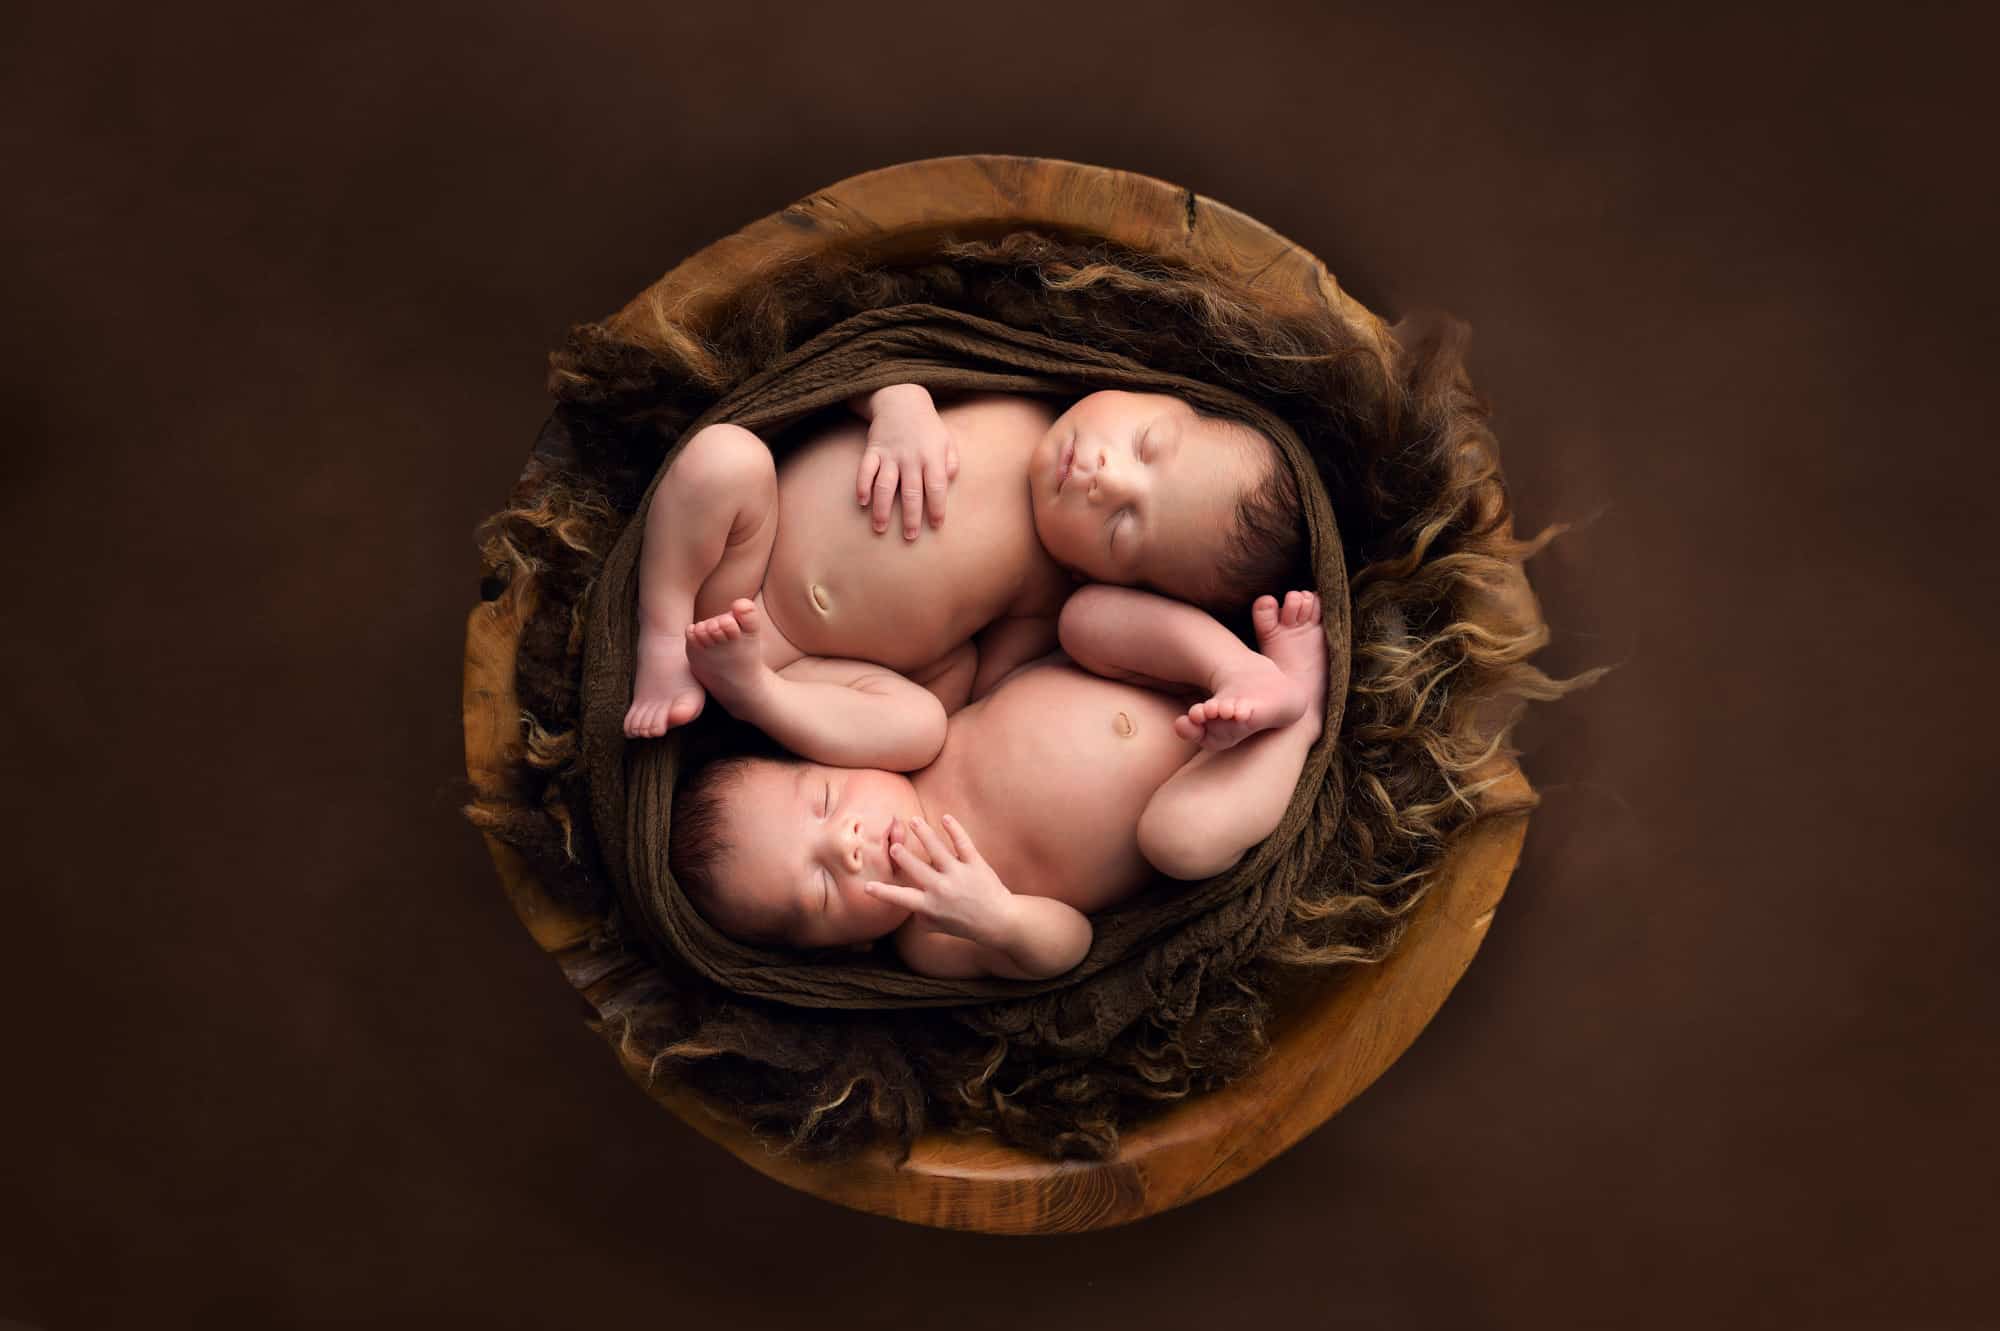 newborn twins asleep in wooden bowl on brown fur